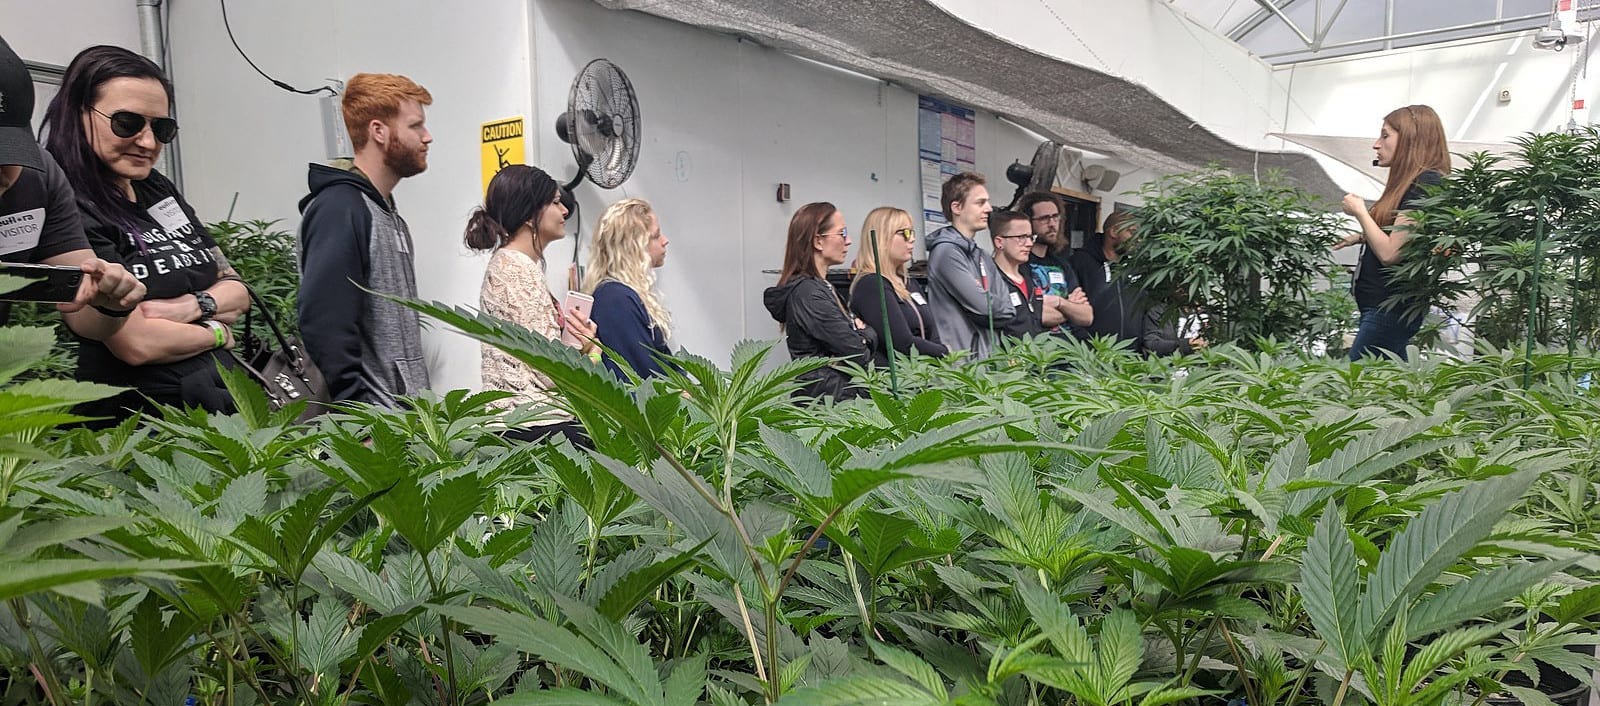 vivid cannabis tours